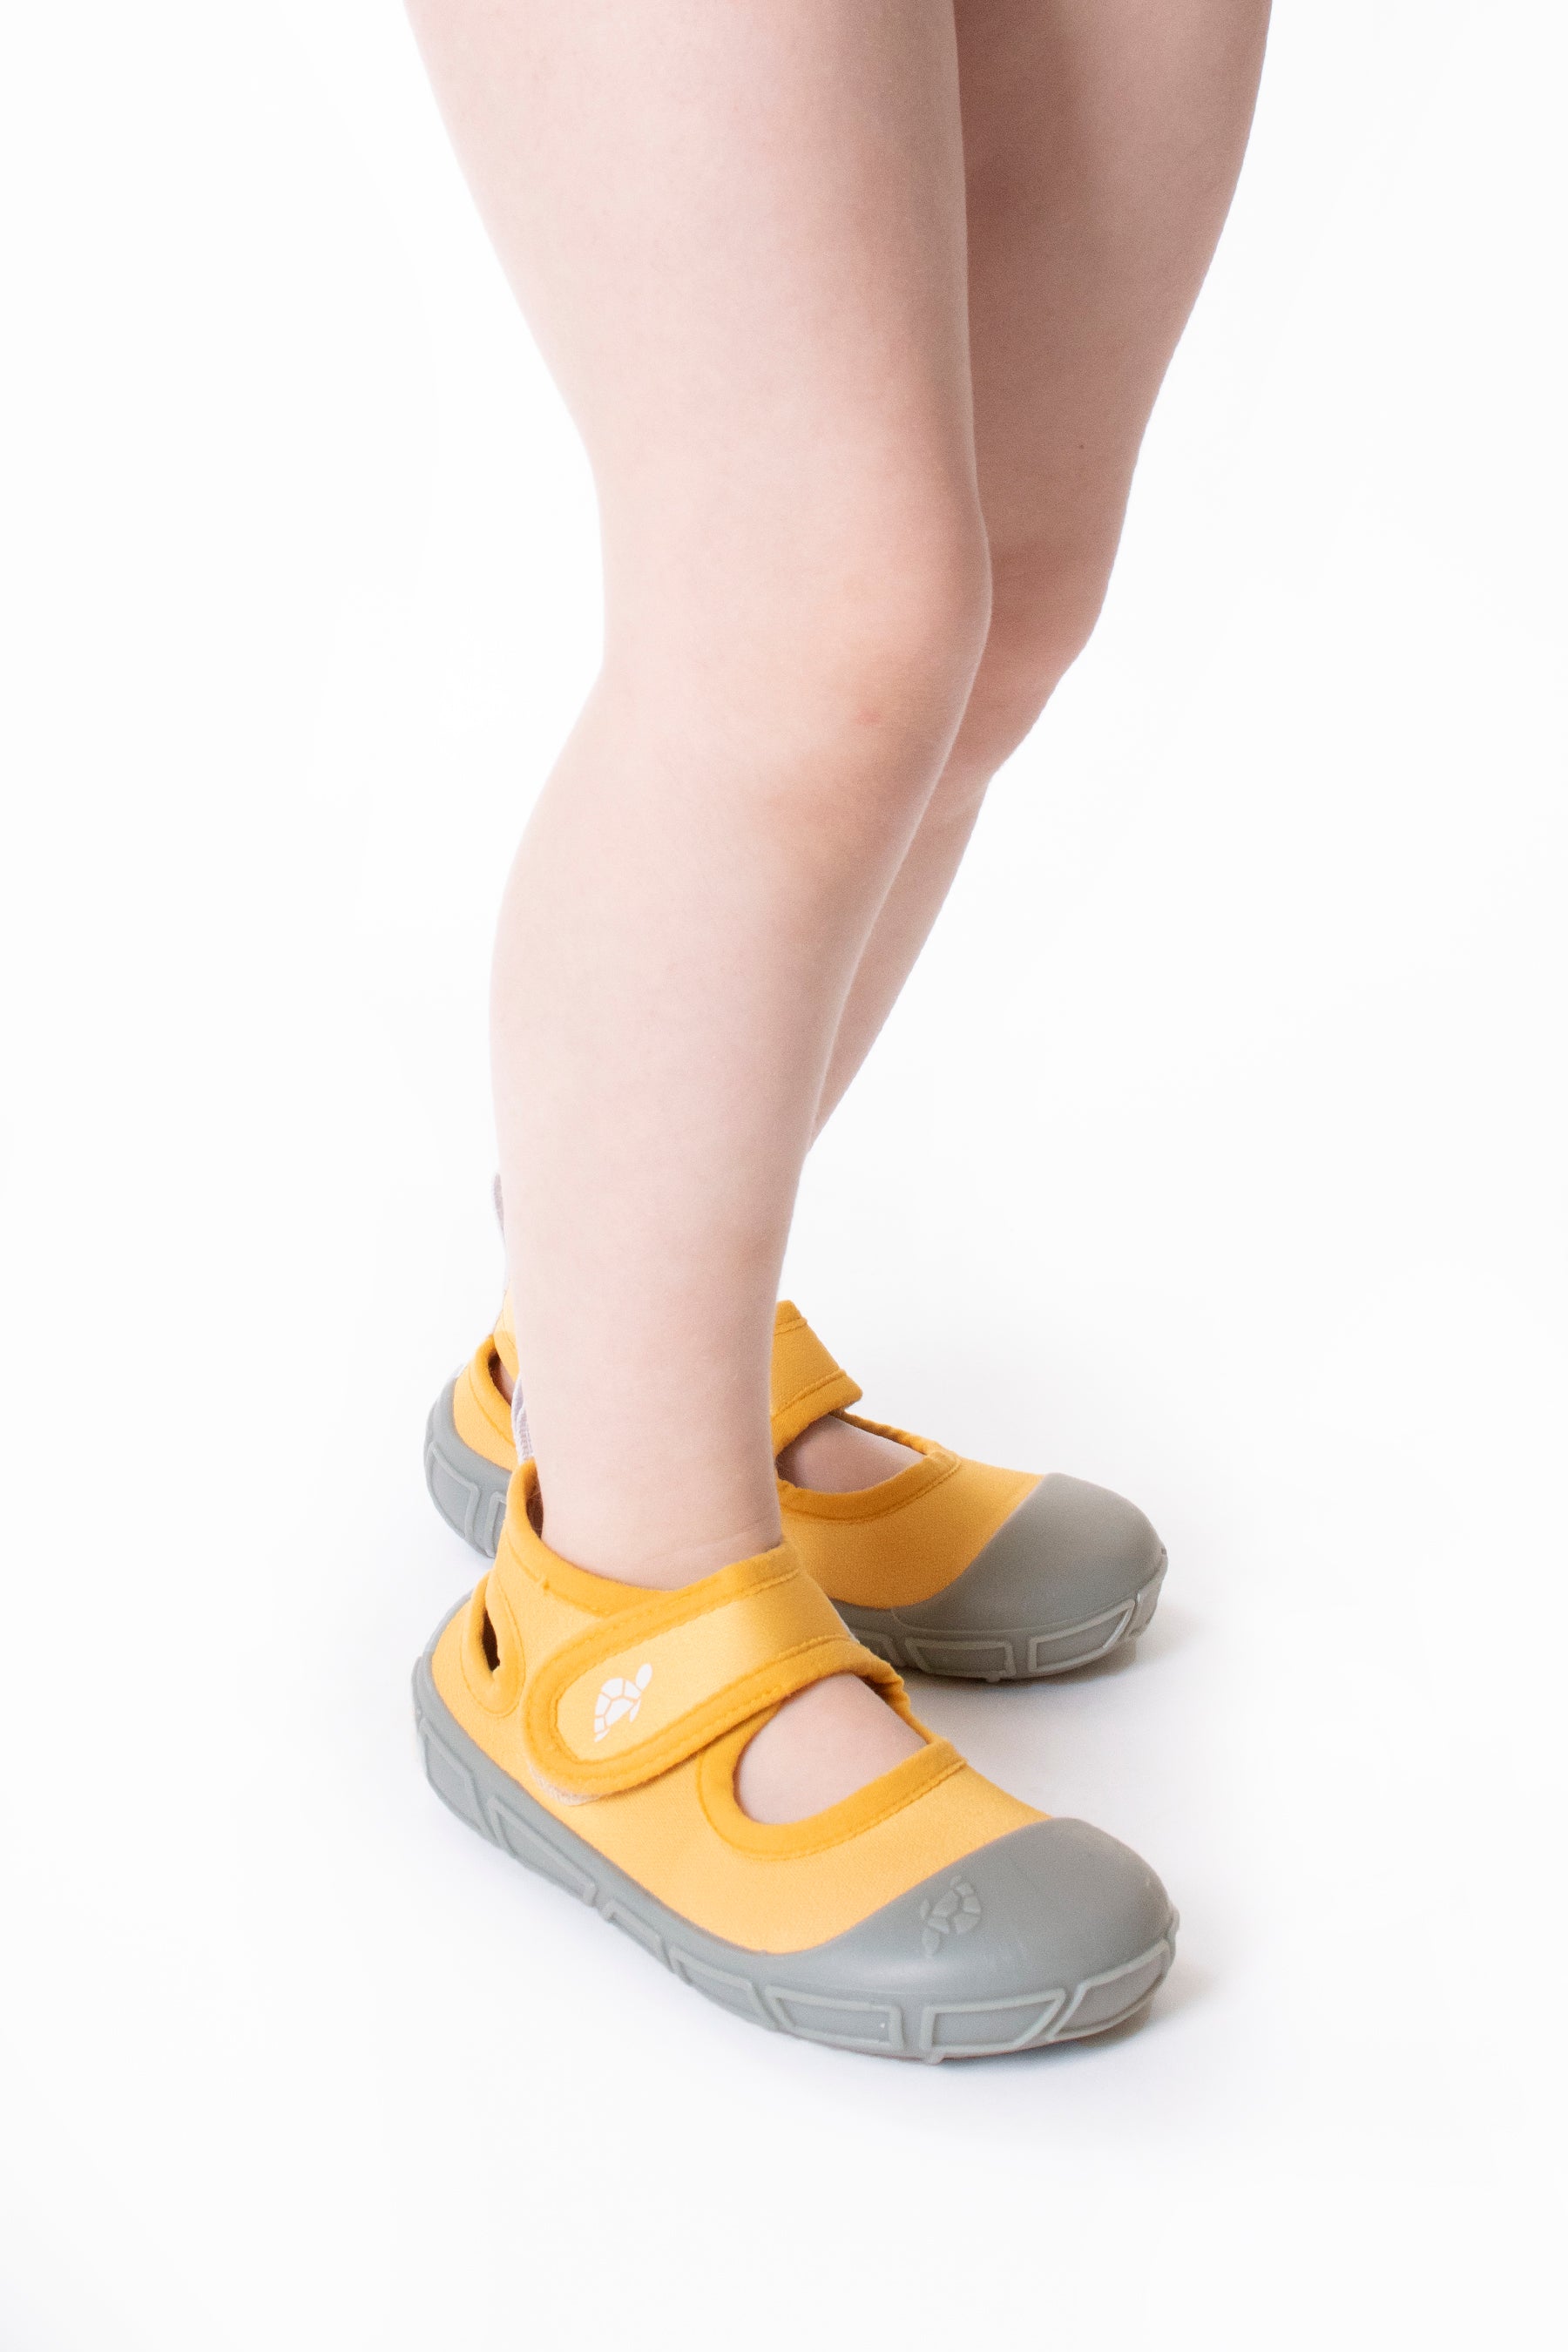 sports sandal in sand/khaki